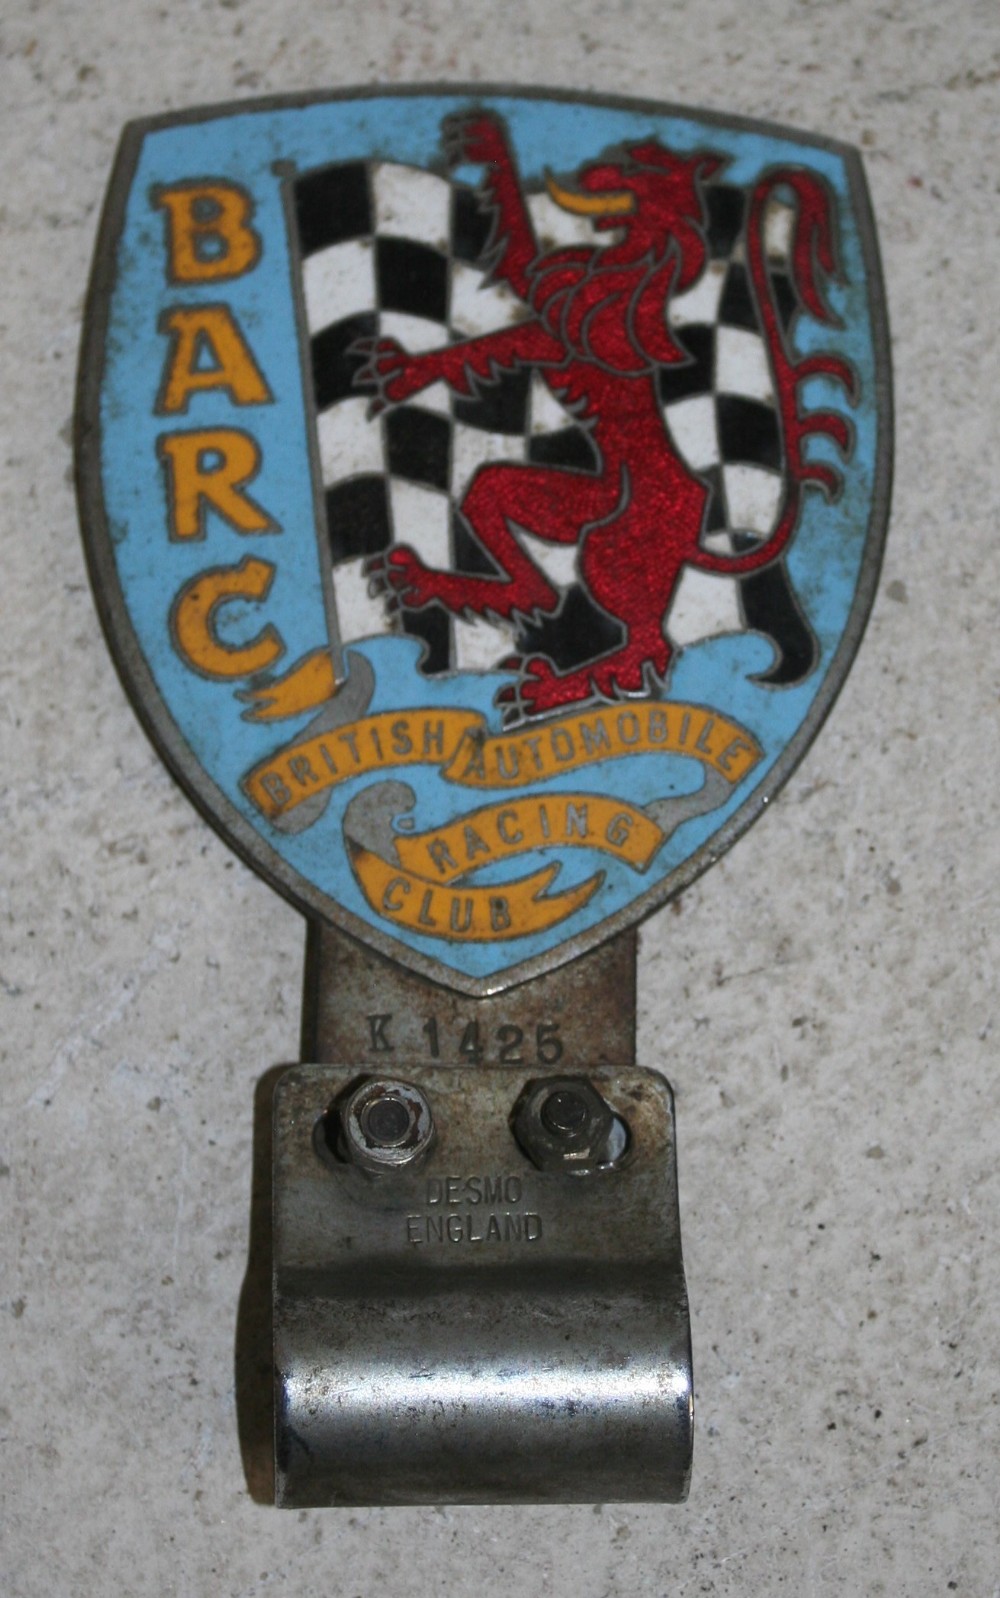 A British Automobile Racing Club bumper badge, number K1425.